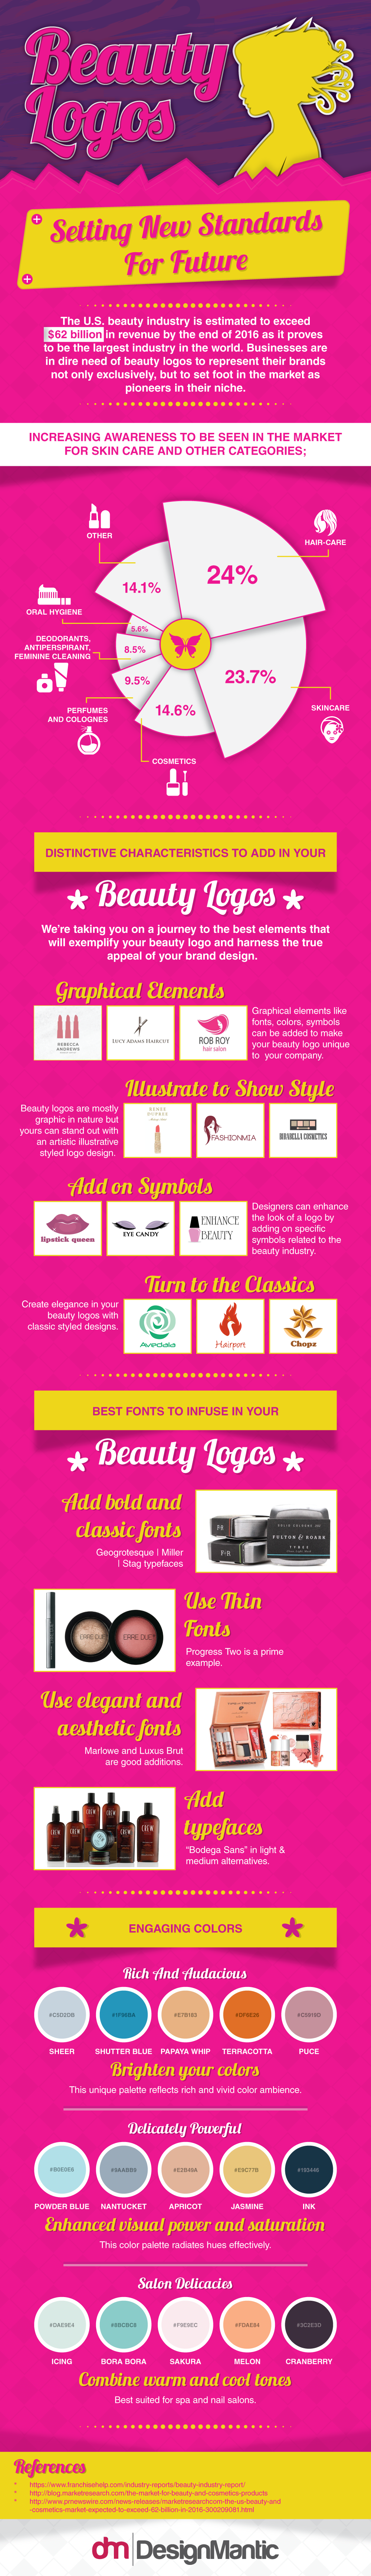 Designing Beauty Brand Identities